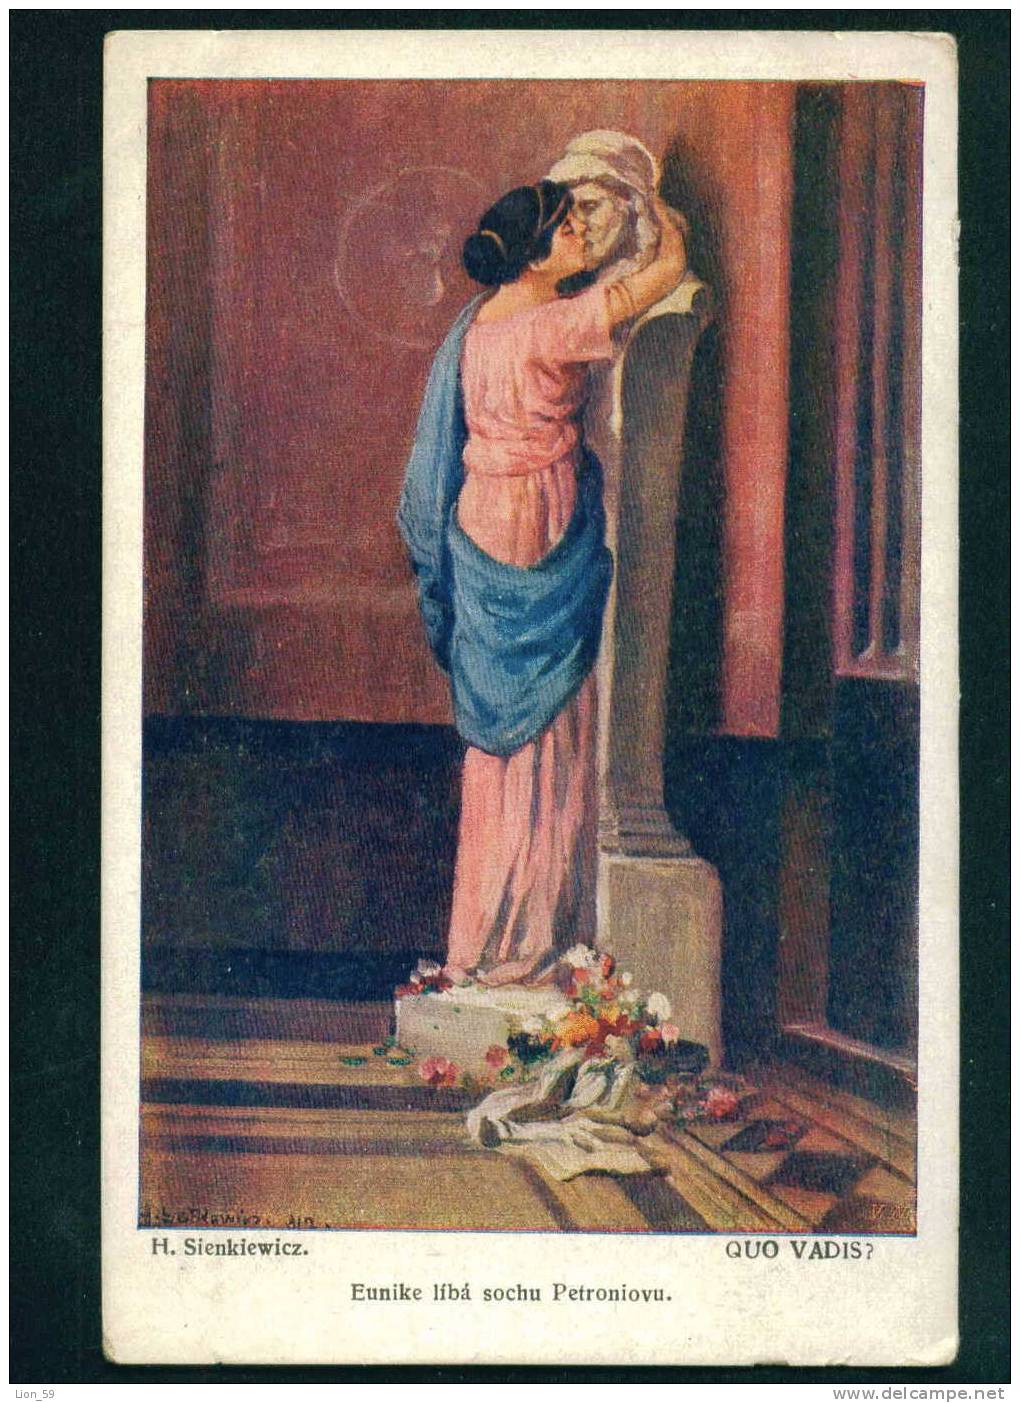 31938 Illustrator KORPAL - Nobel Prize Literature 1905 Henryk Sienkiewicz - QUO VADIS - EUNIKE KISS BUST PETRONIOVU - Prix Nobel